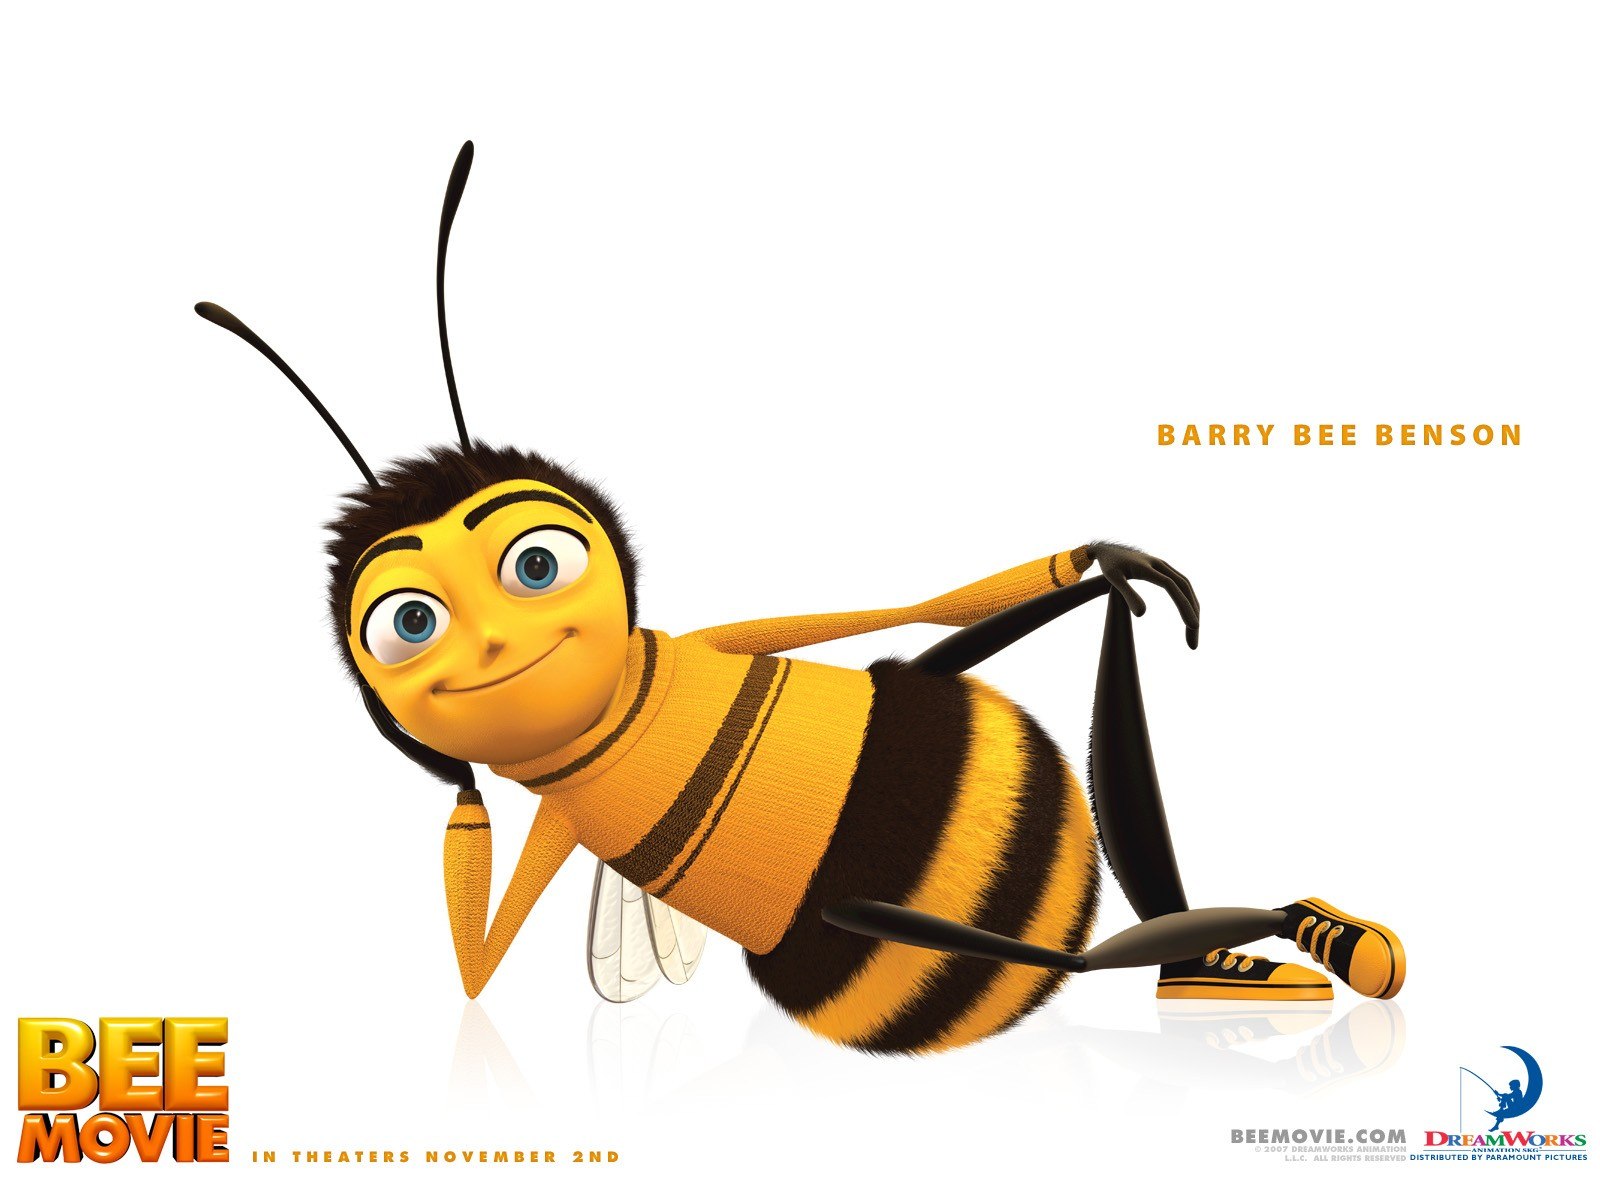 The Bee movie